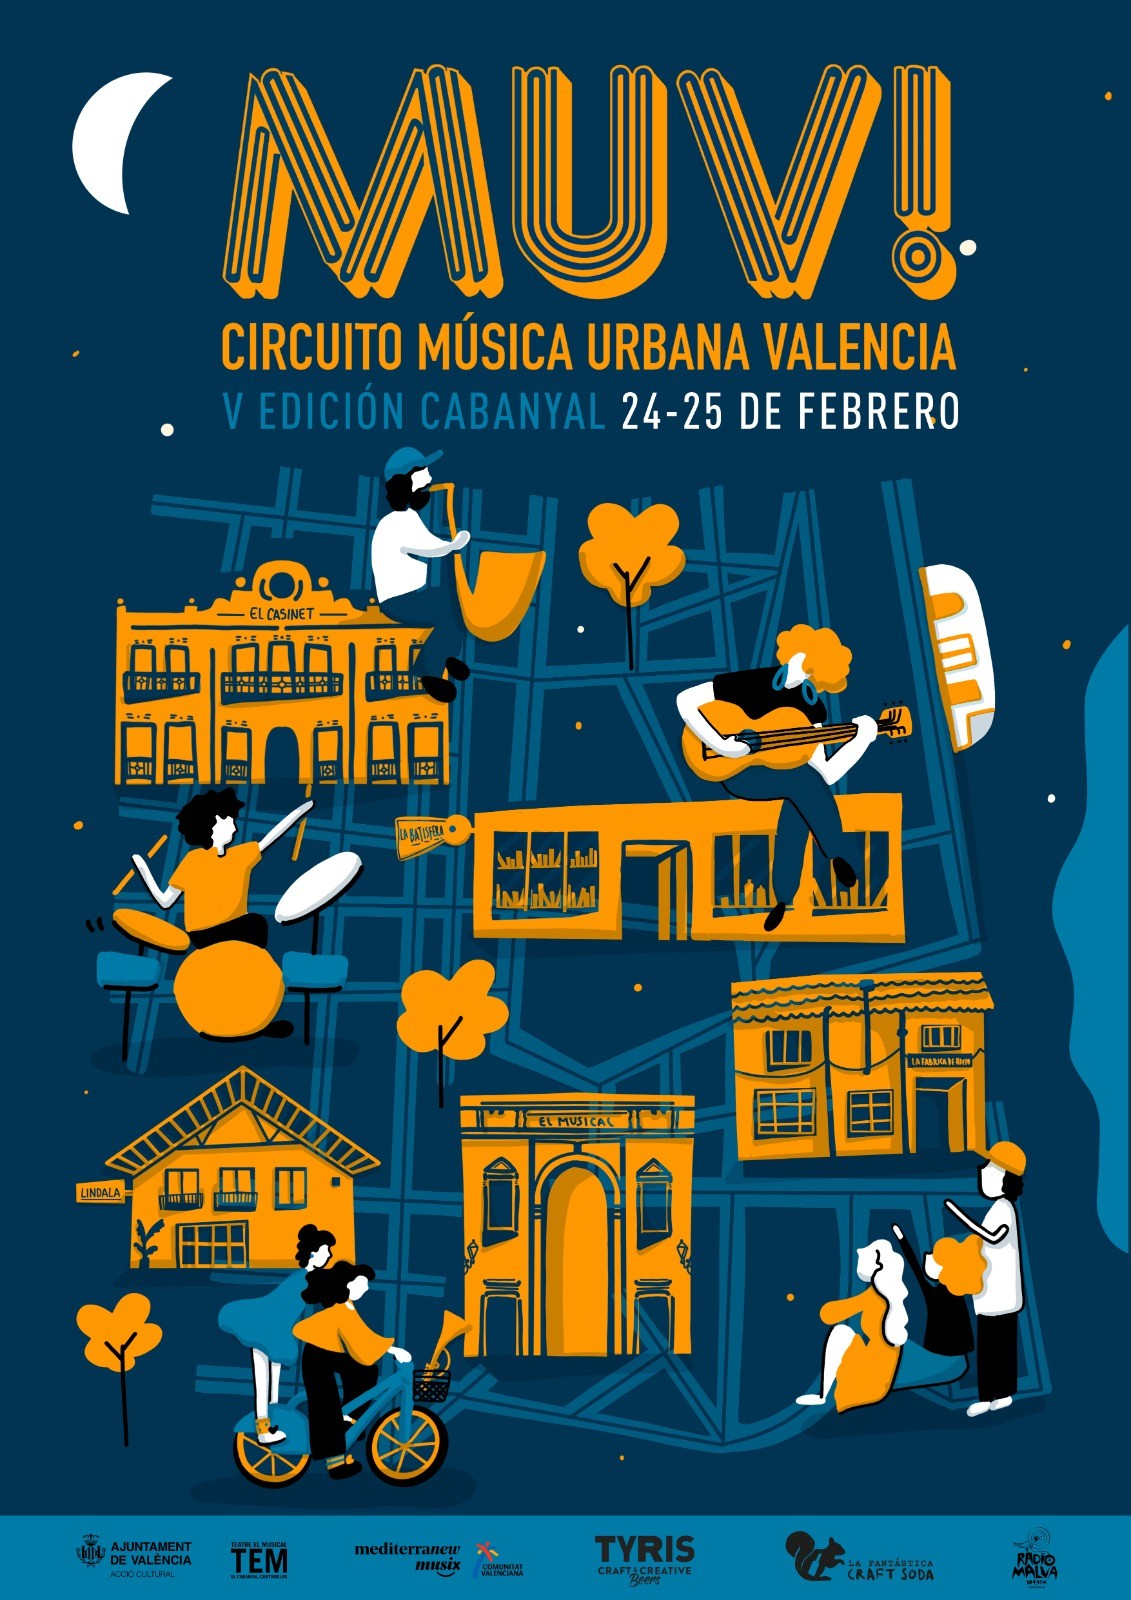 El Festival MUV! Circuito Música Urbana Valencia retoma su pulso musical